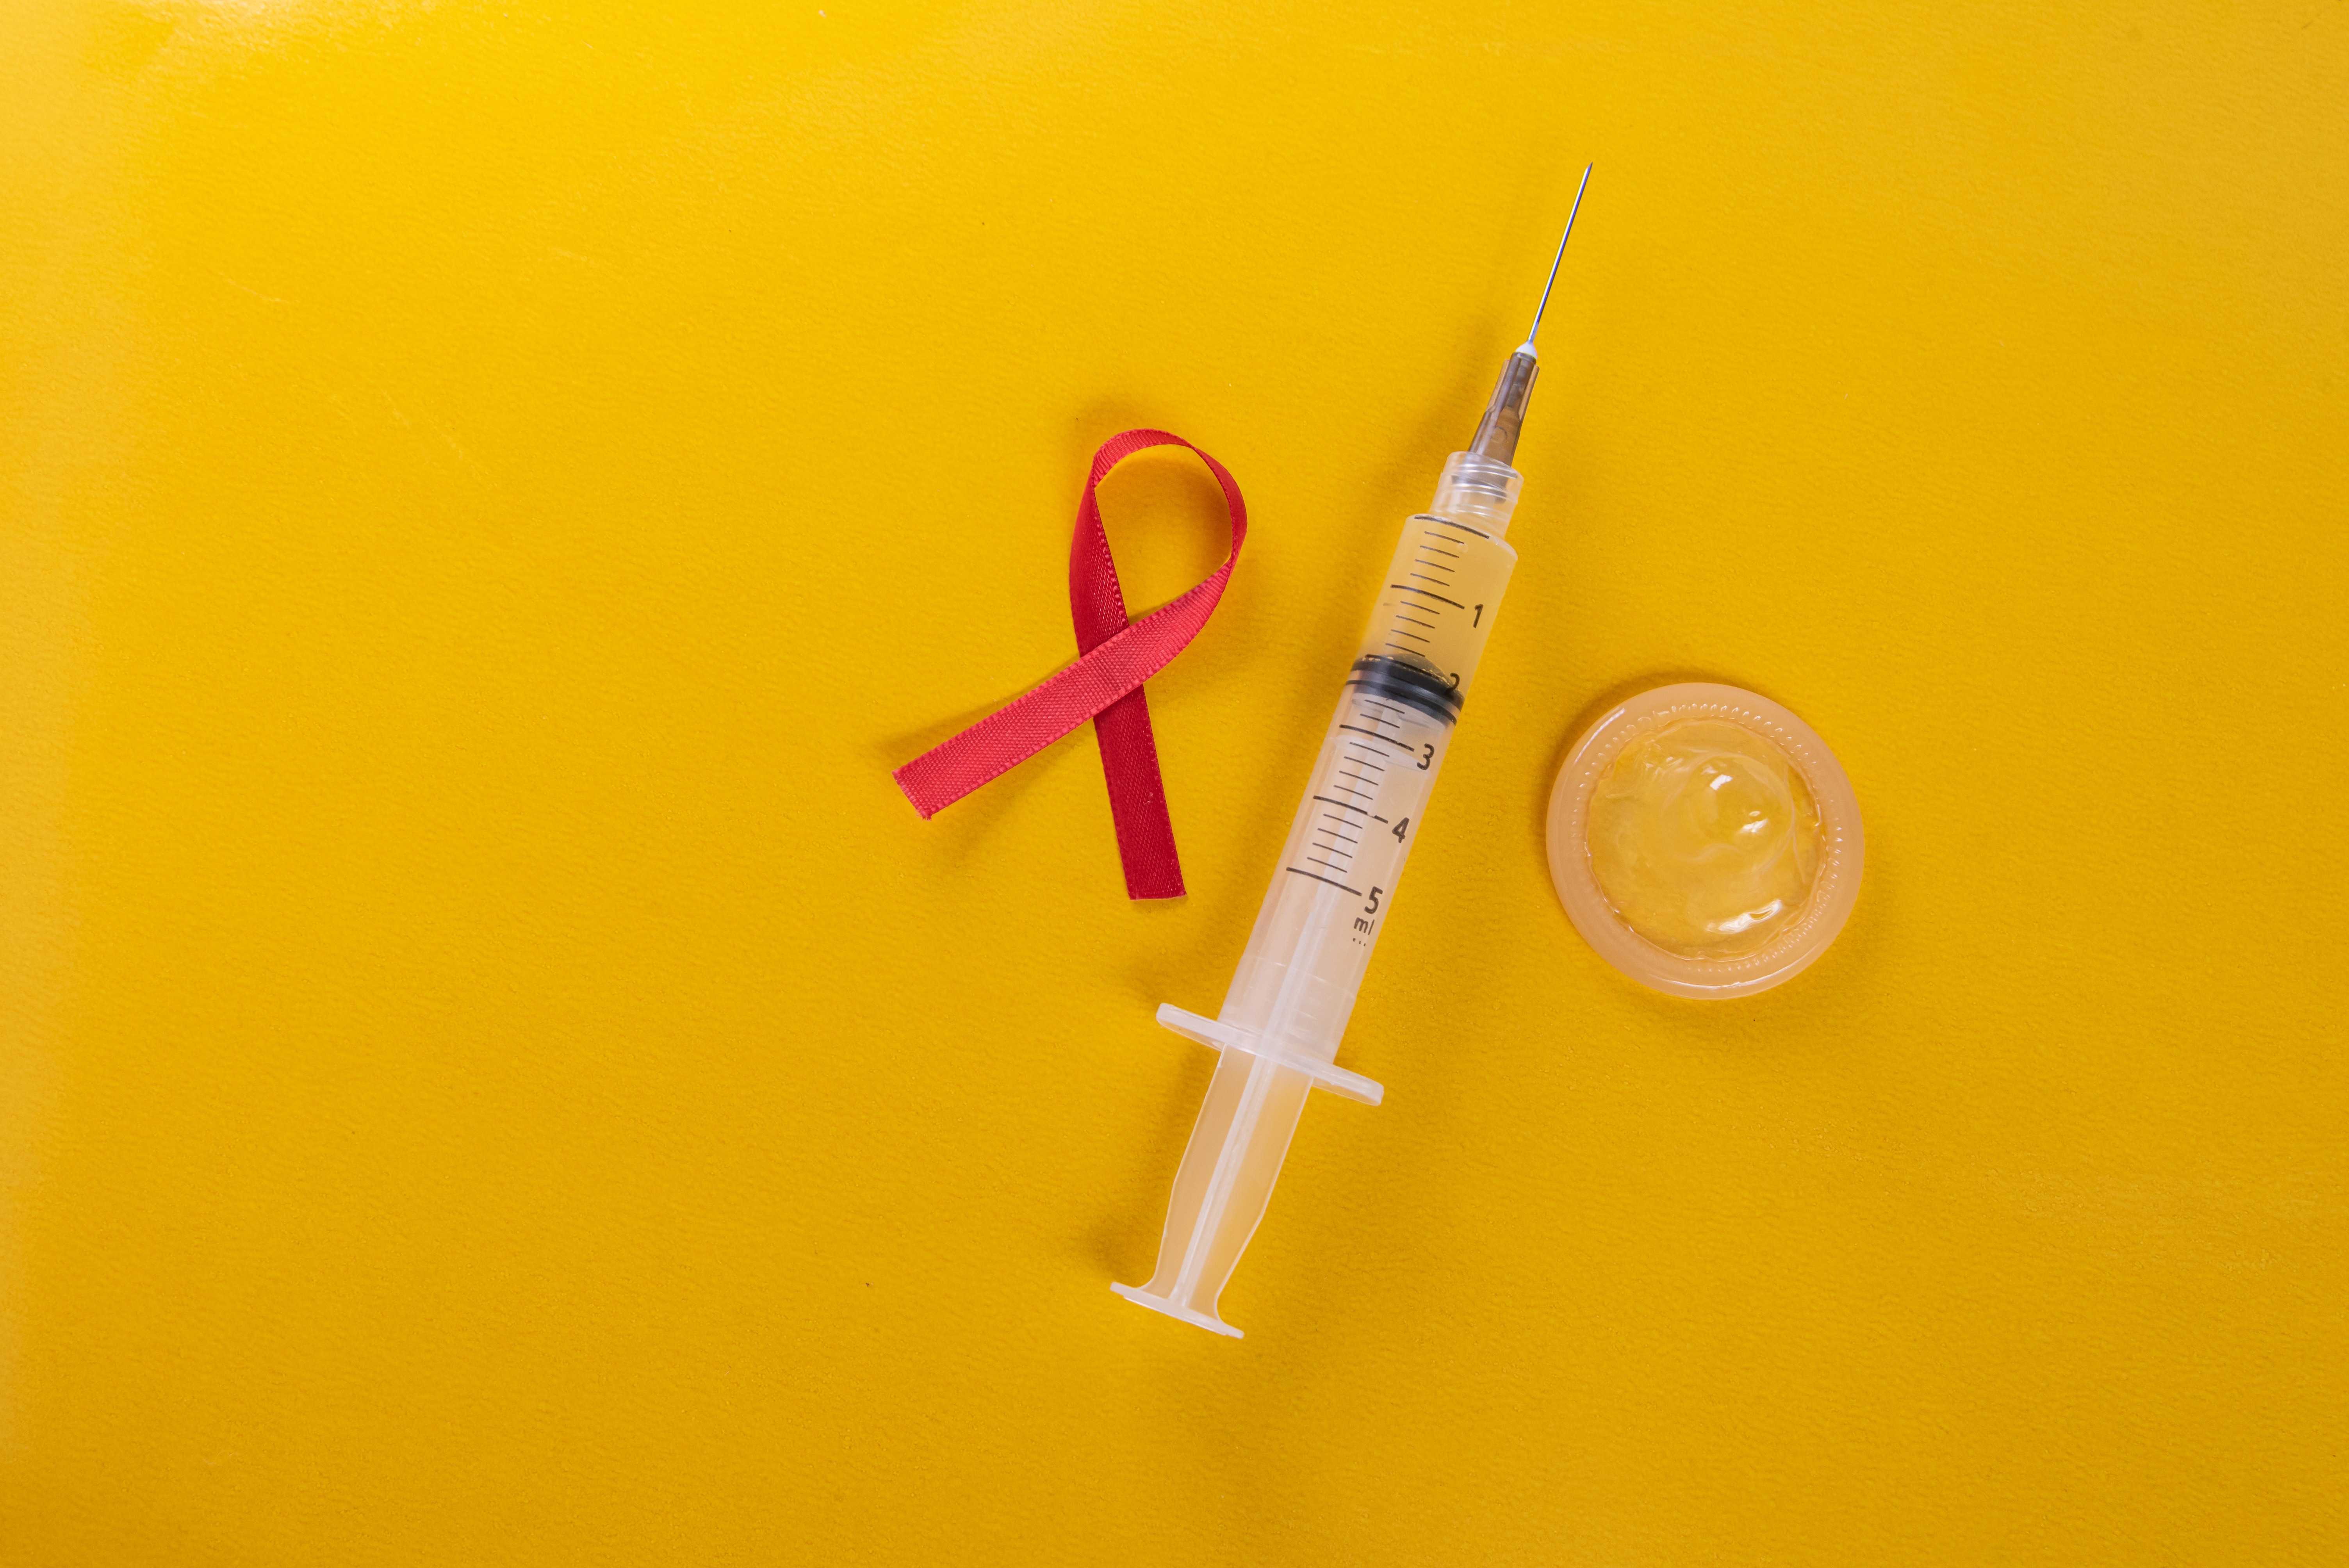 Groundbreaking Advancements Propel HIV Vaccine Research Forward